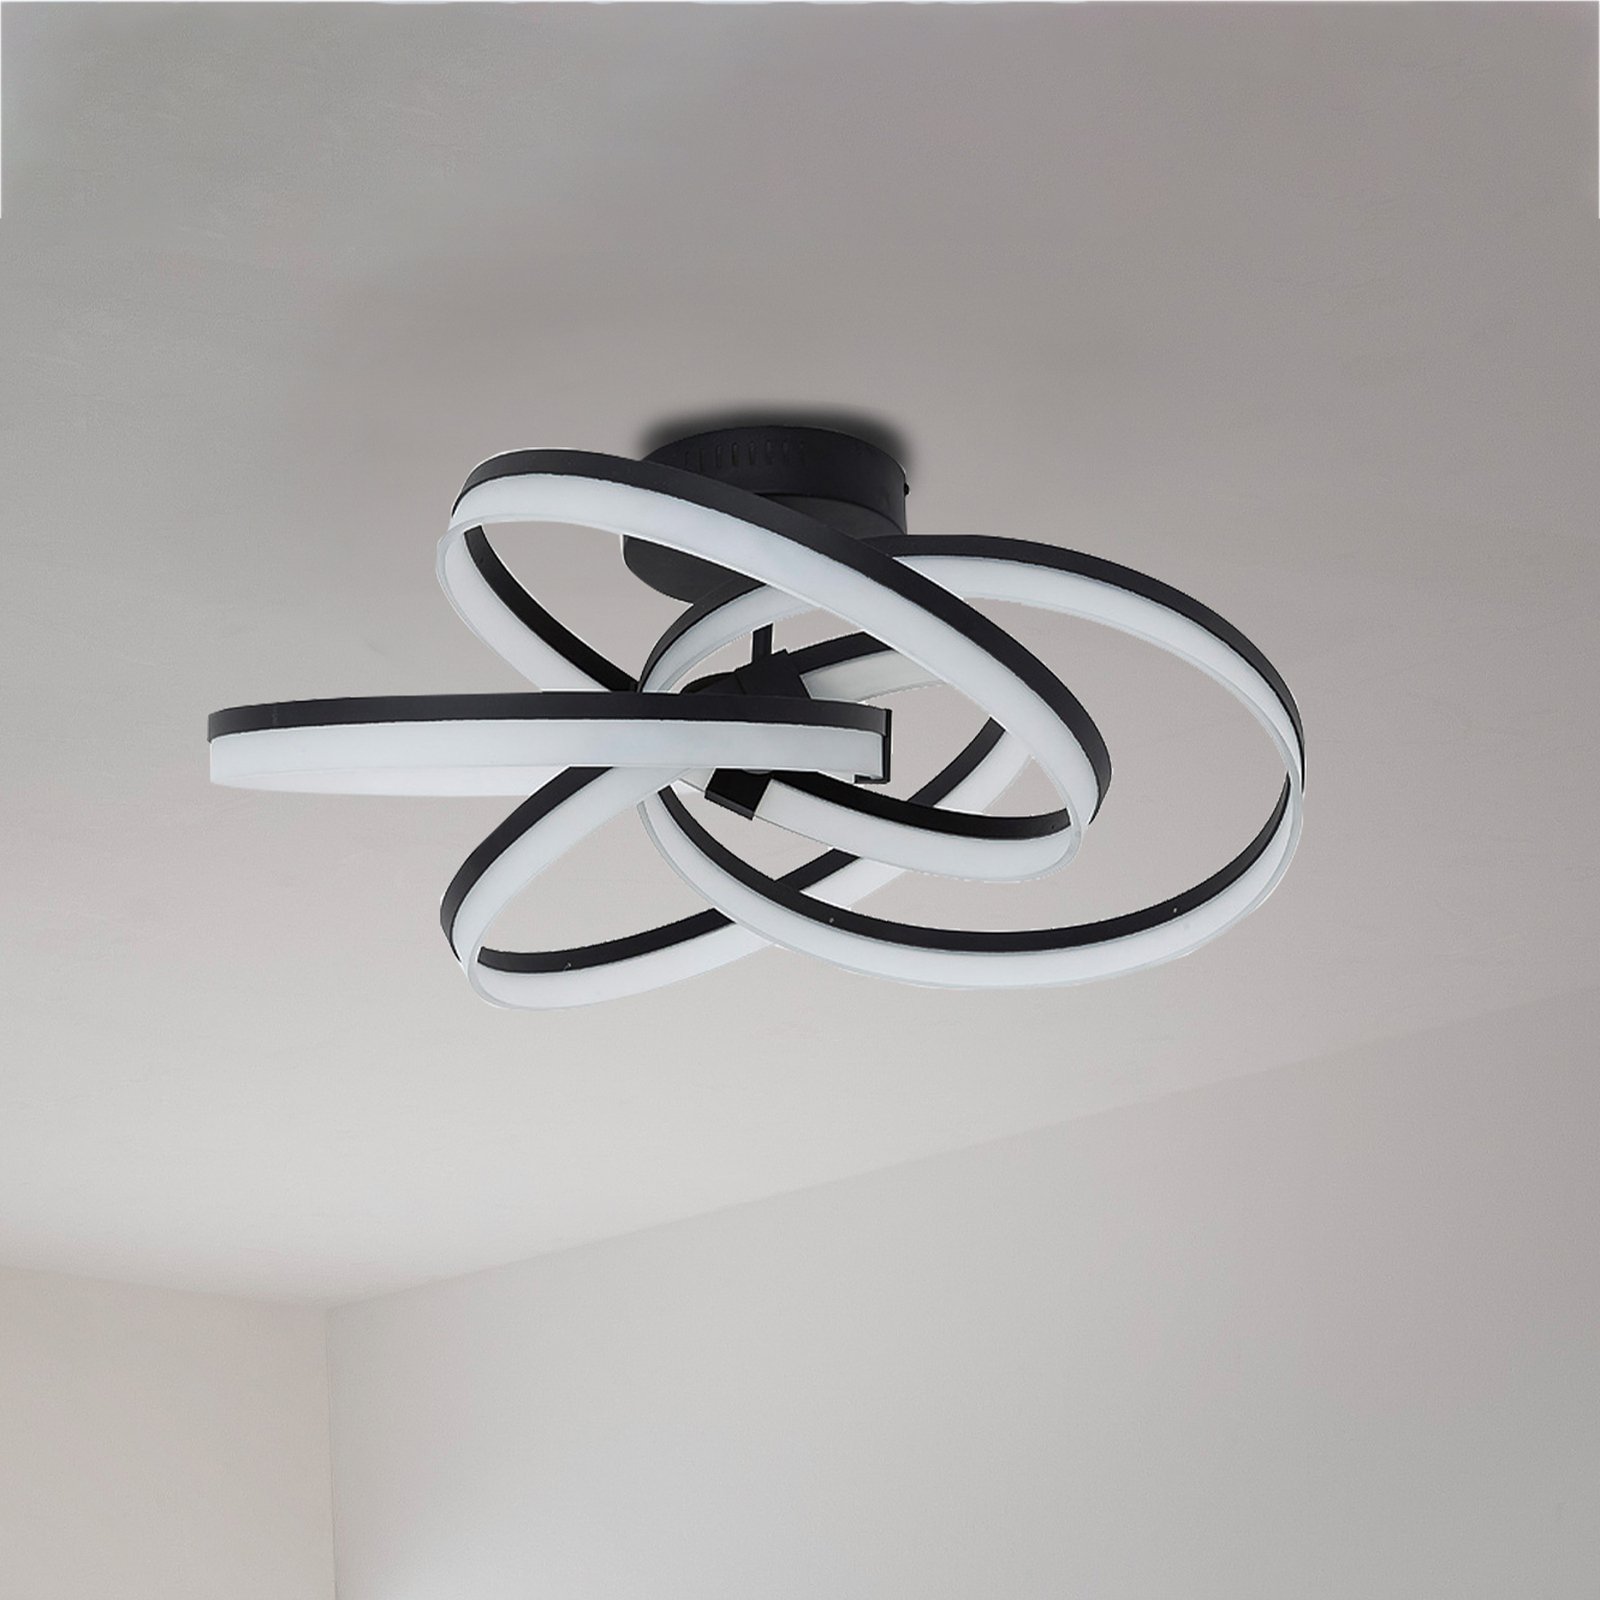 Schöner Wohnen Loop LED ceiling light CCT black